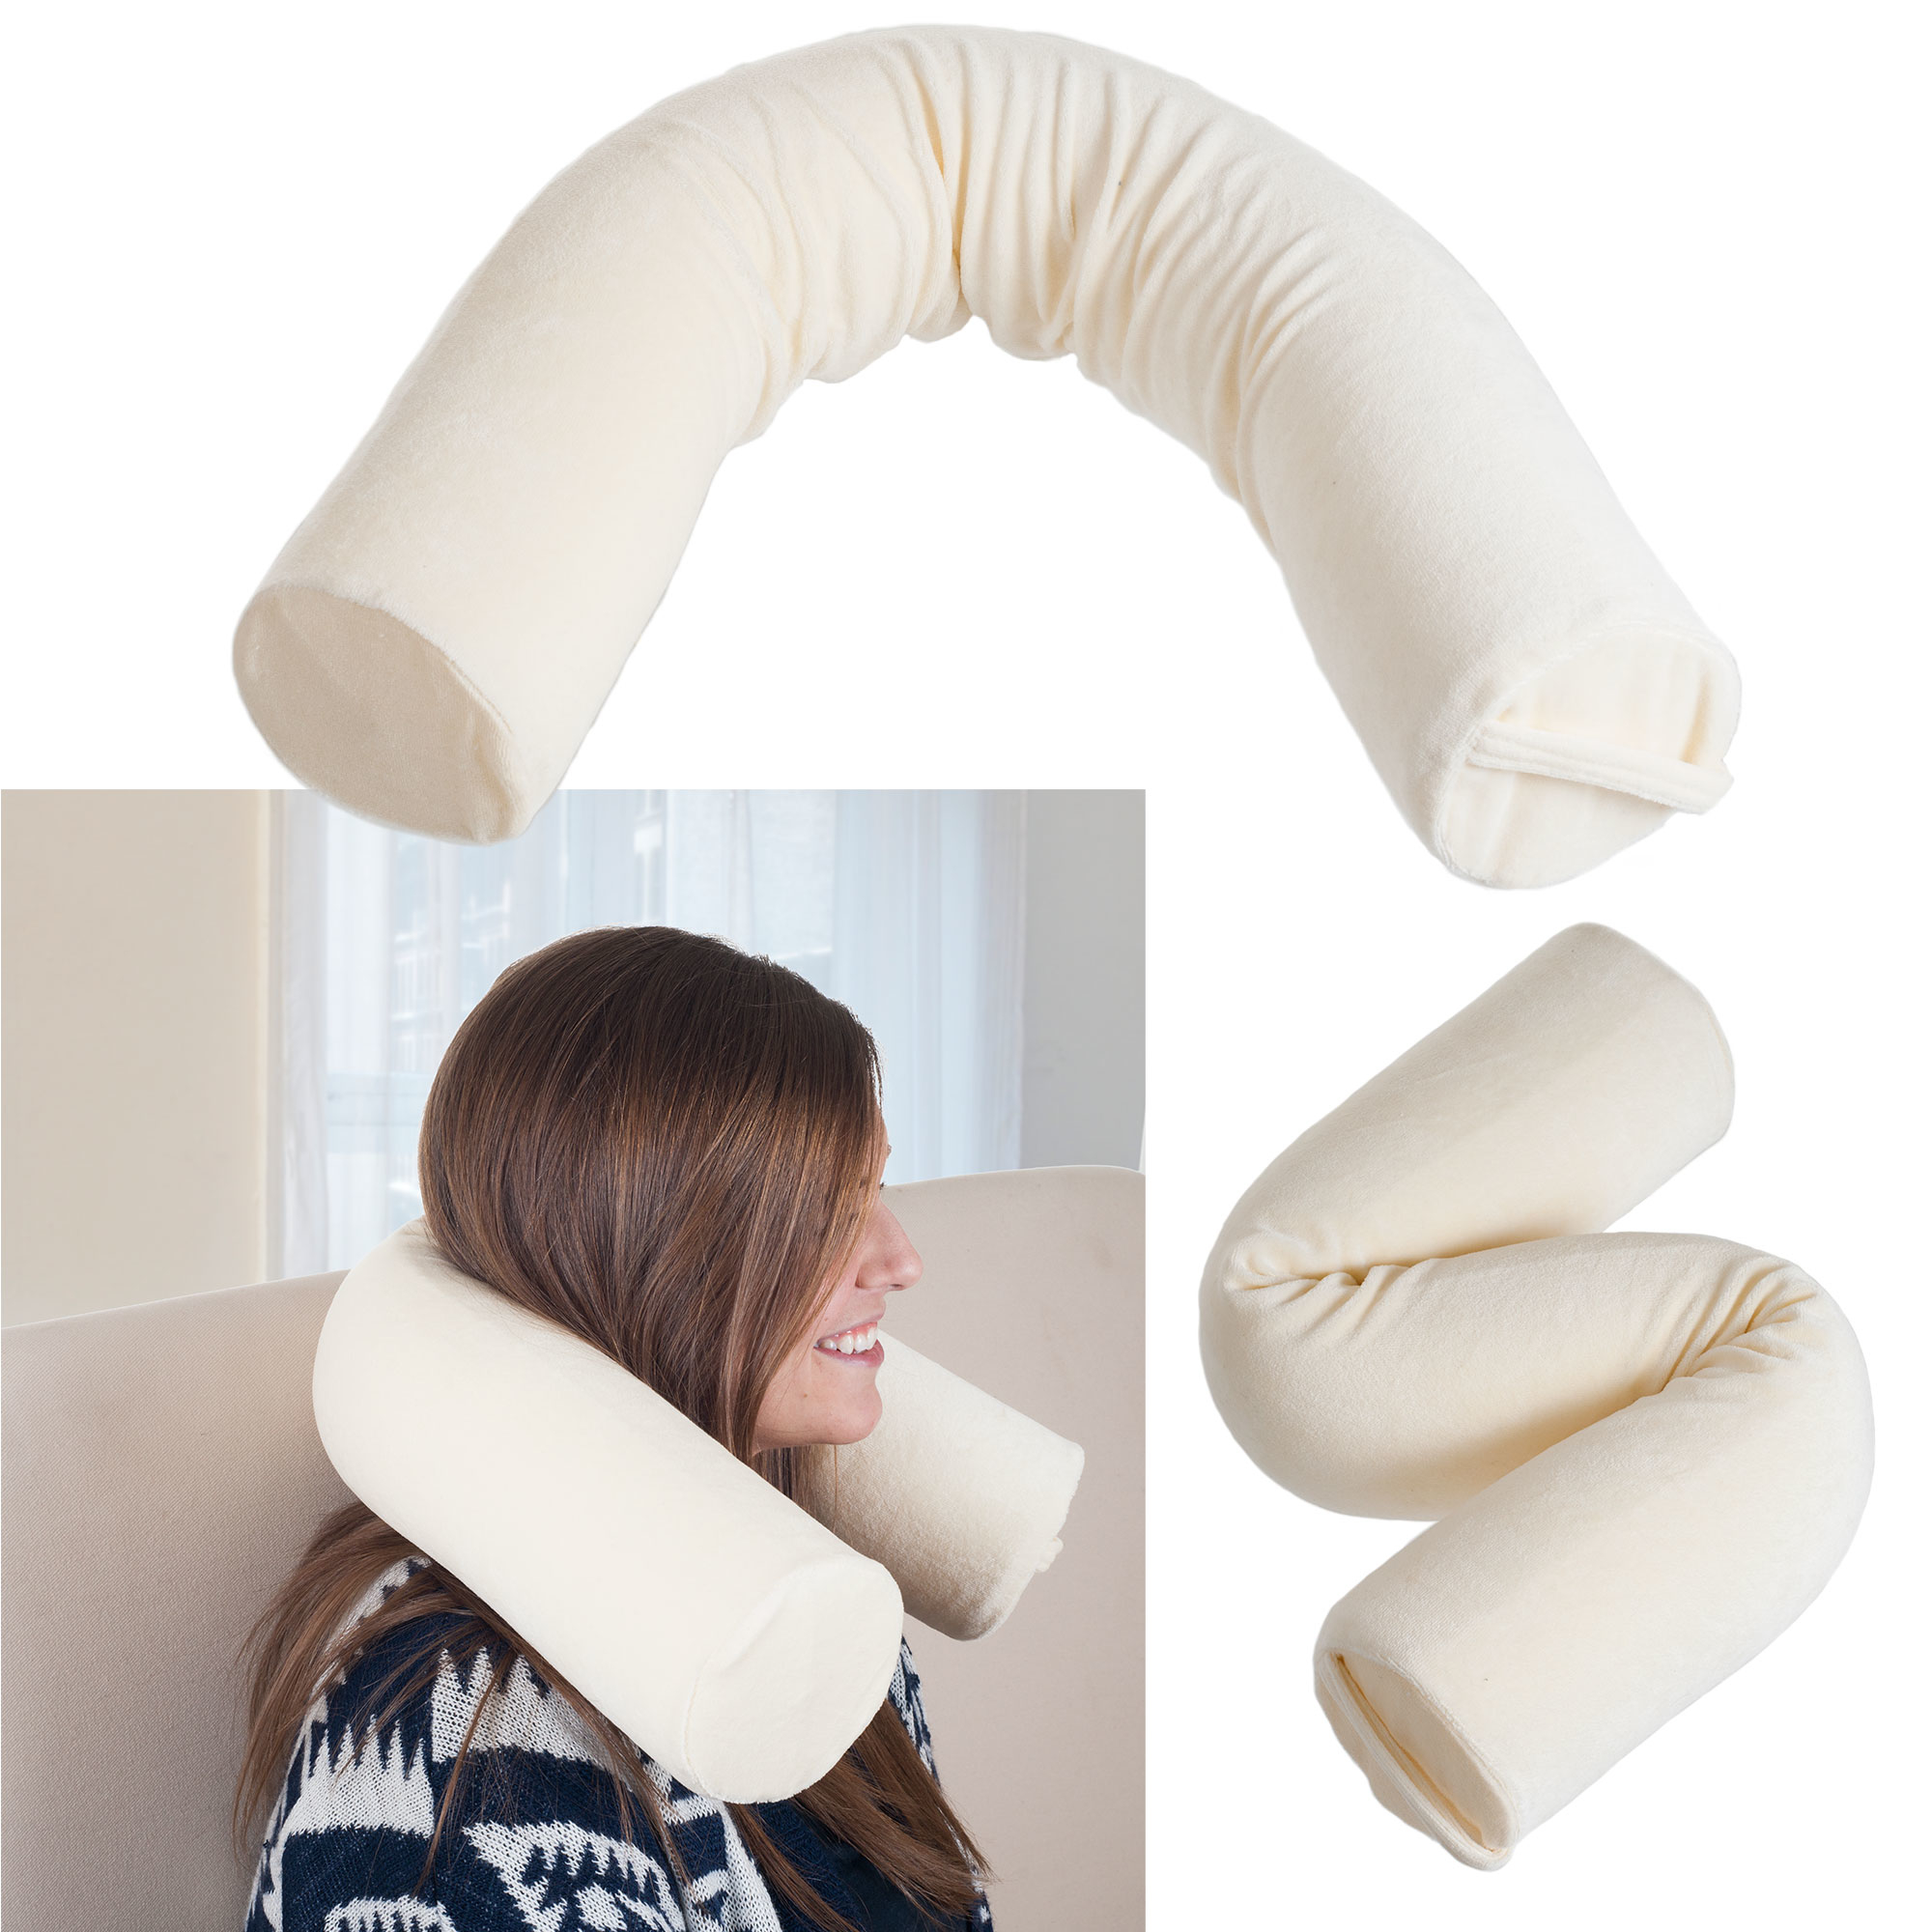 Remedy Memory Foam Customizable Twist Pillow